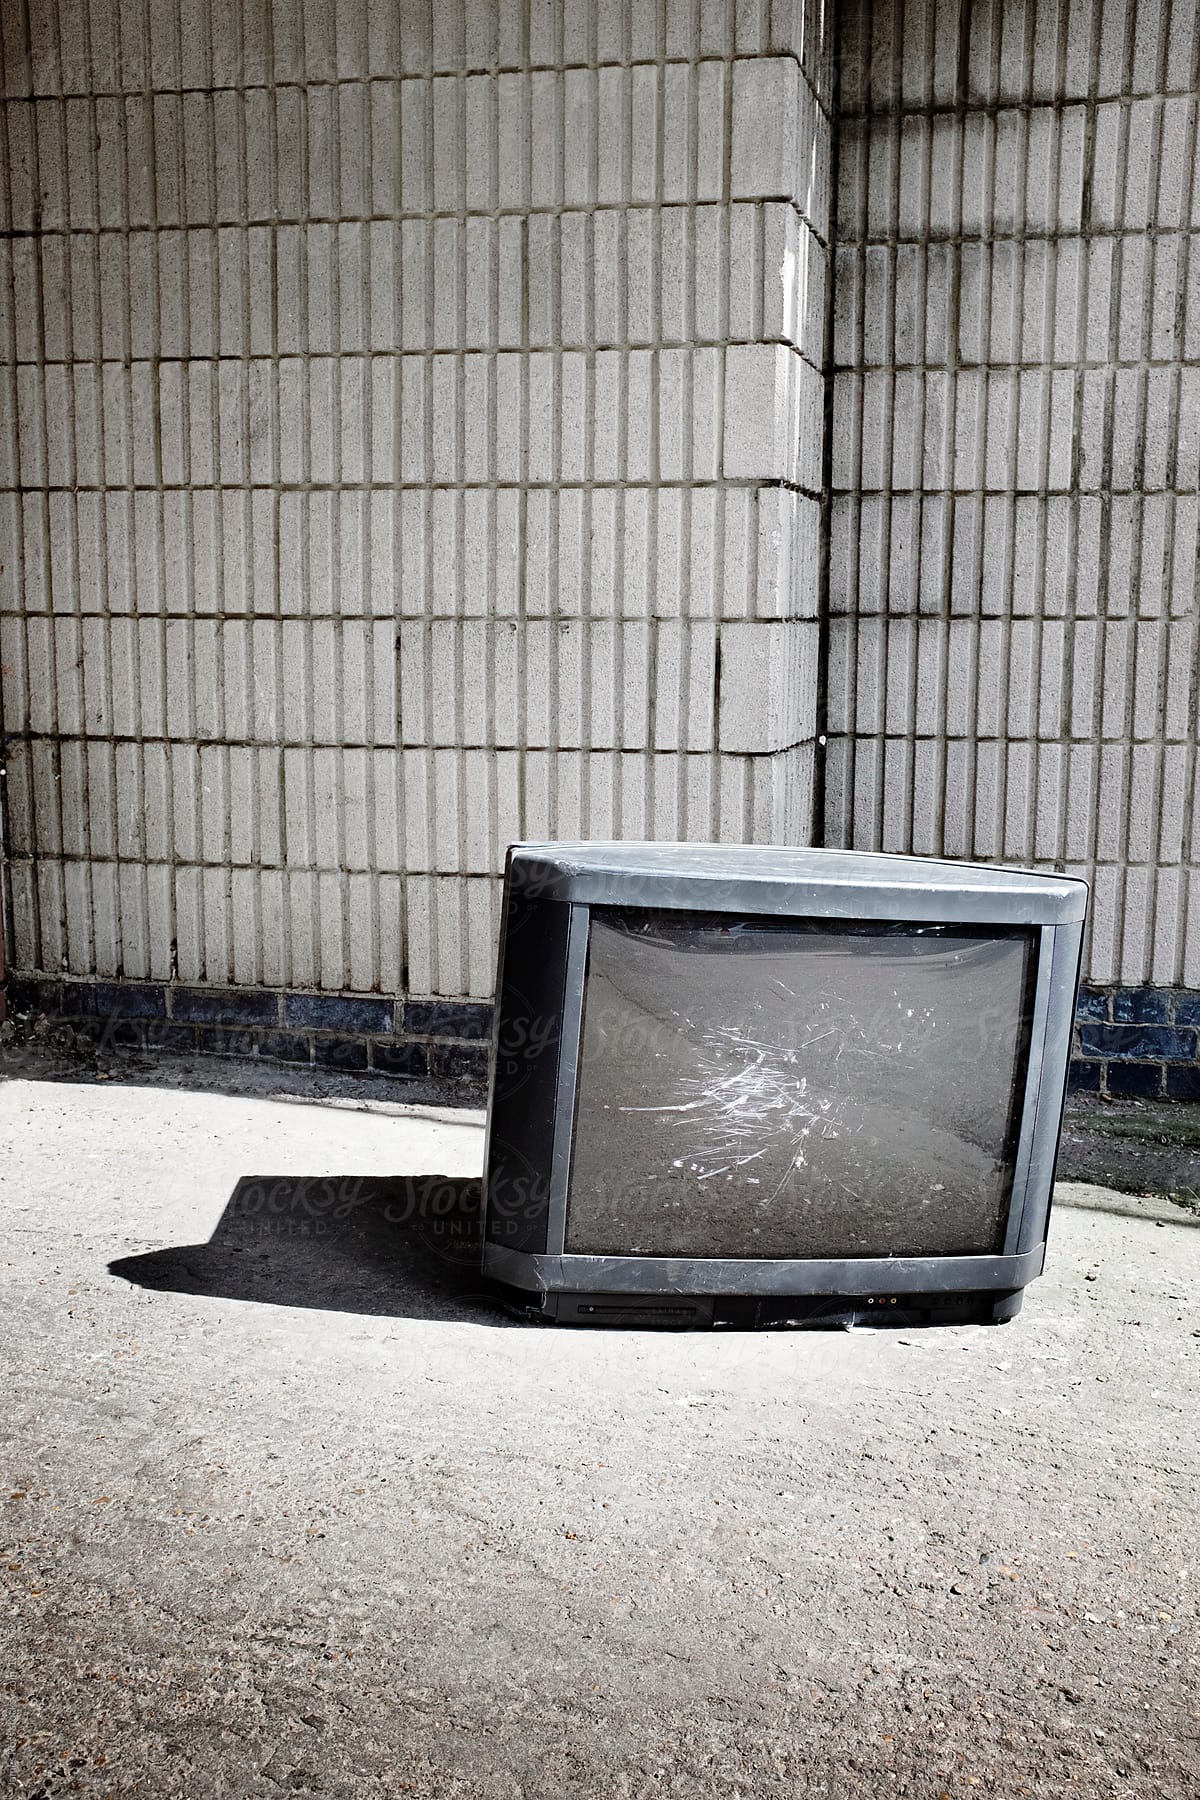 Broken television